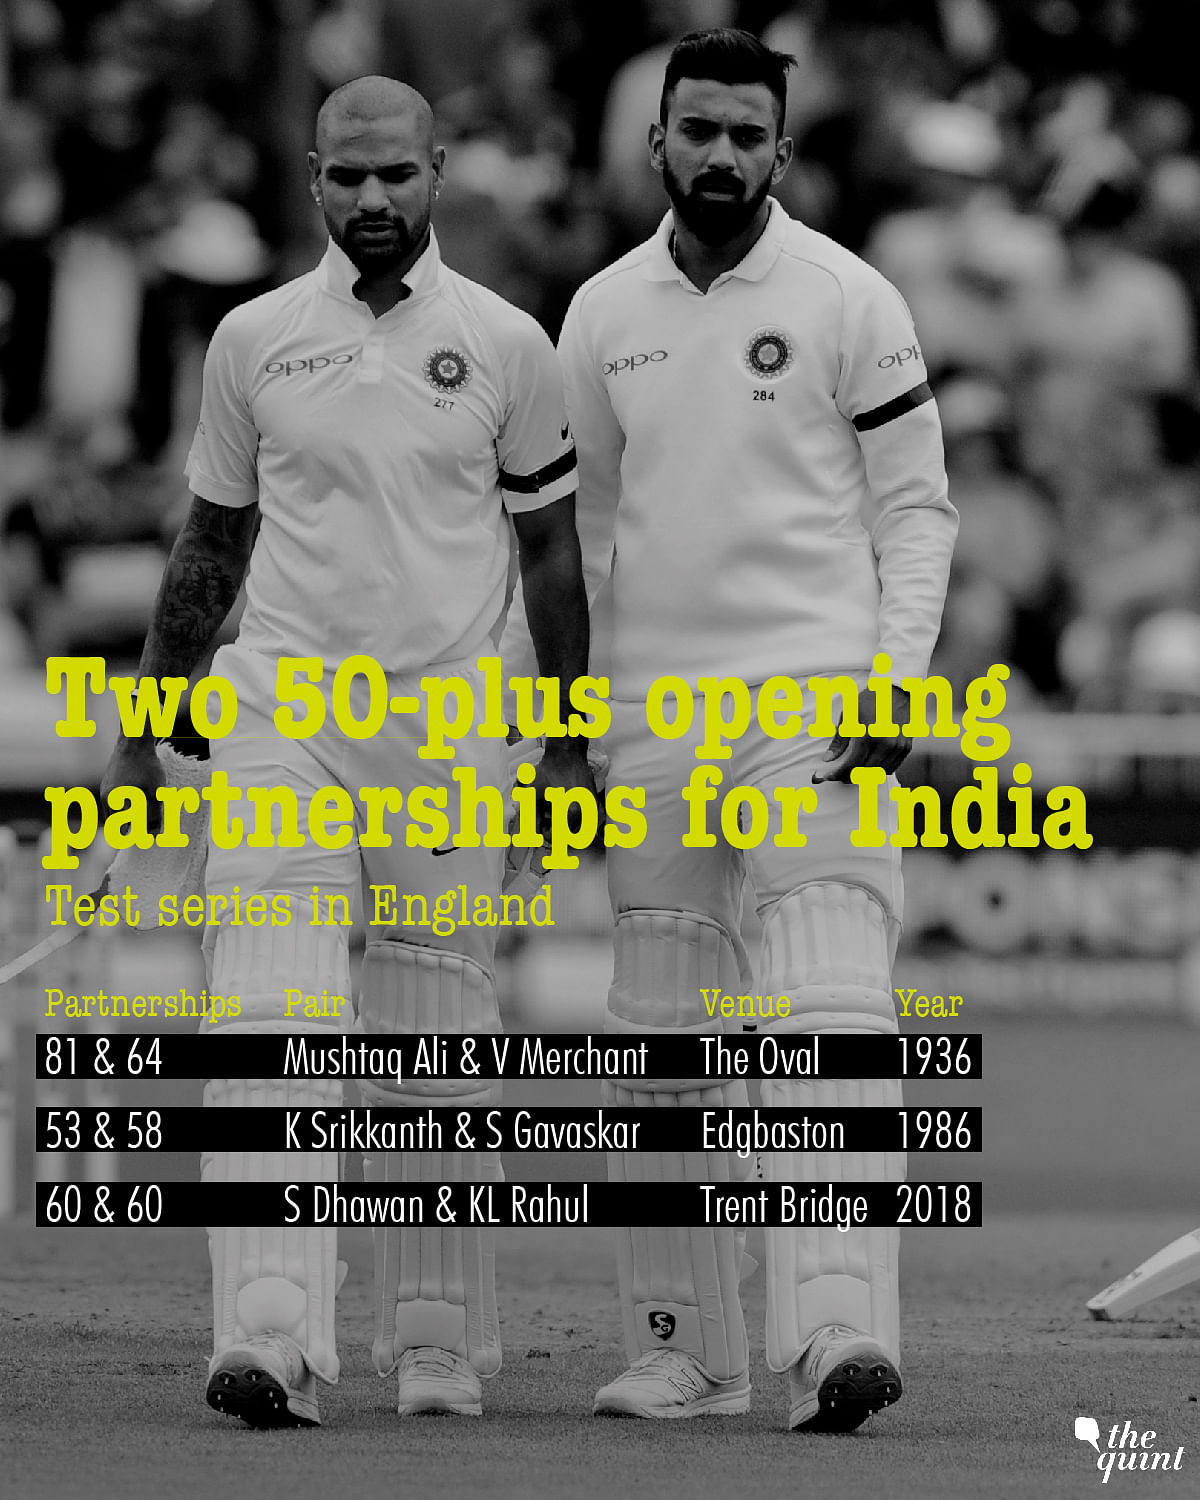 Trent Bridge Test: India beat England by 23 runs, England lead series 2-1.